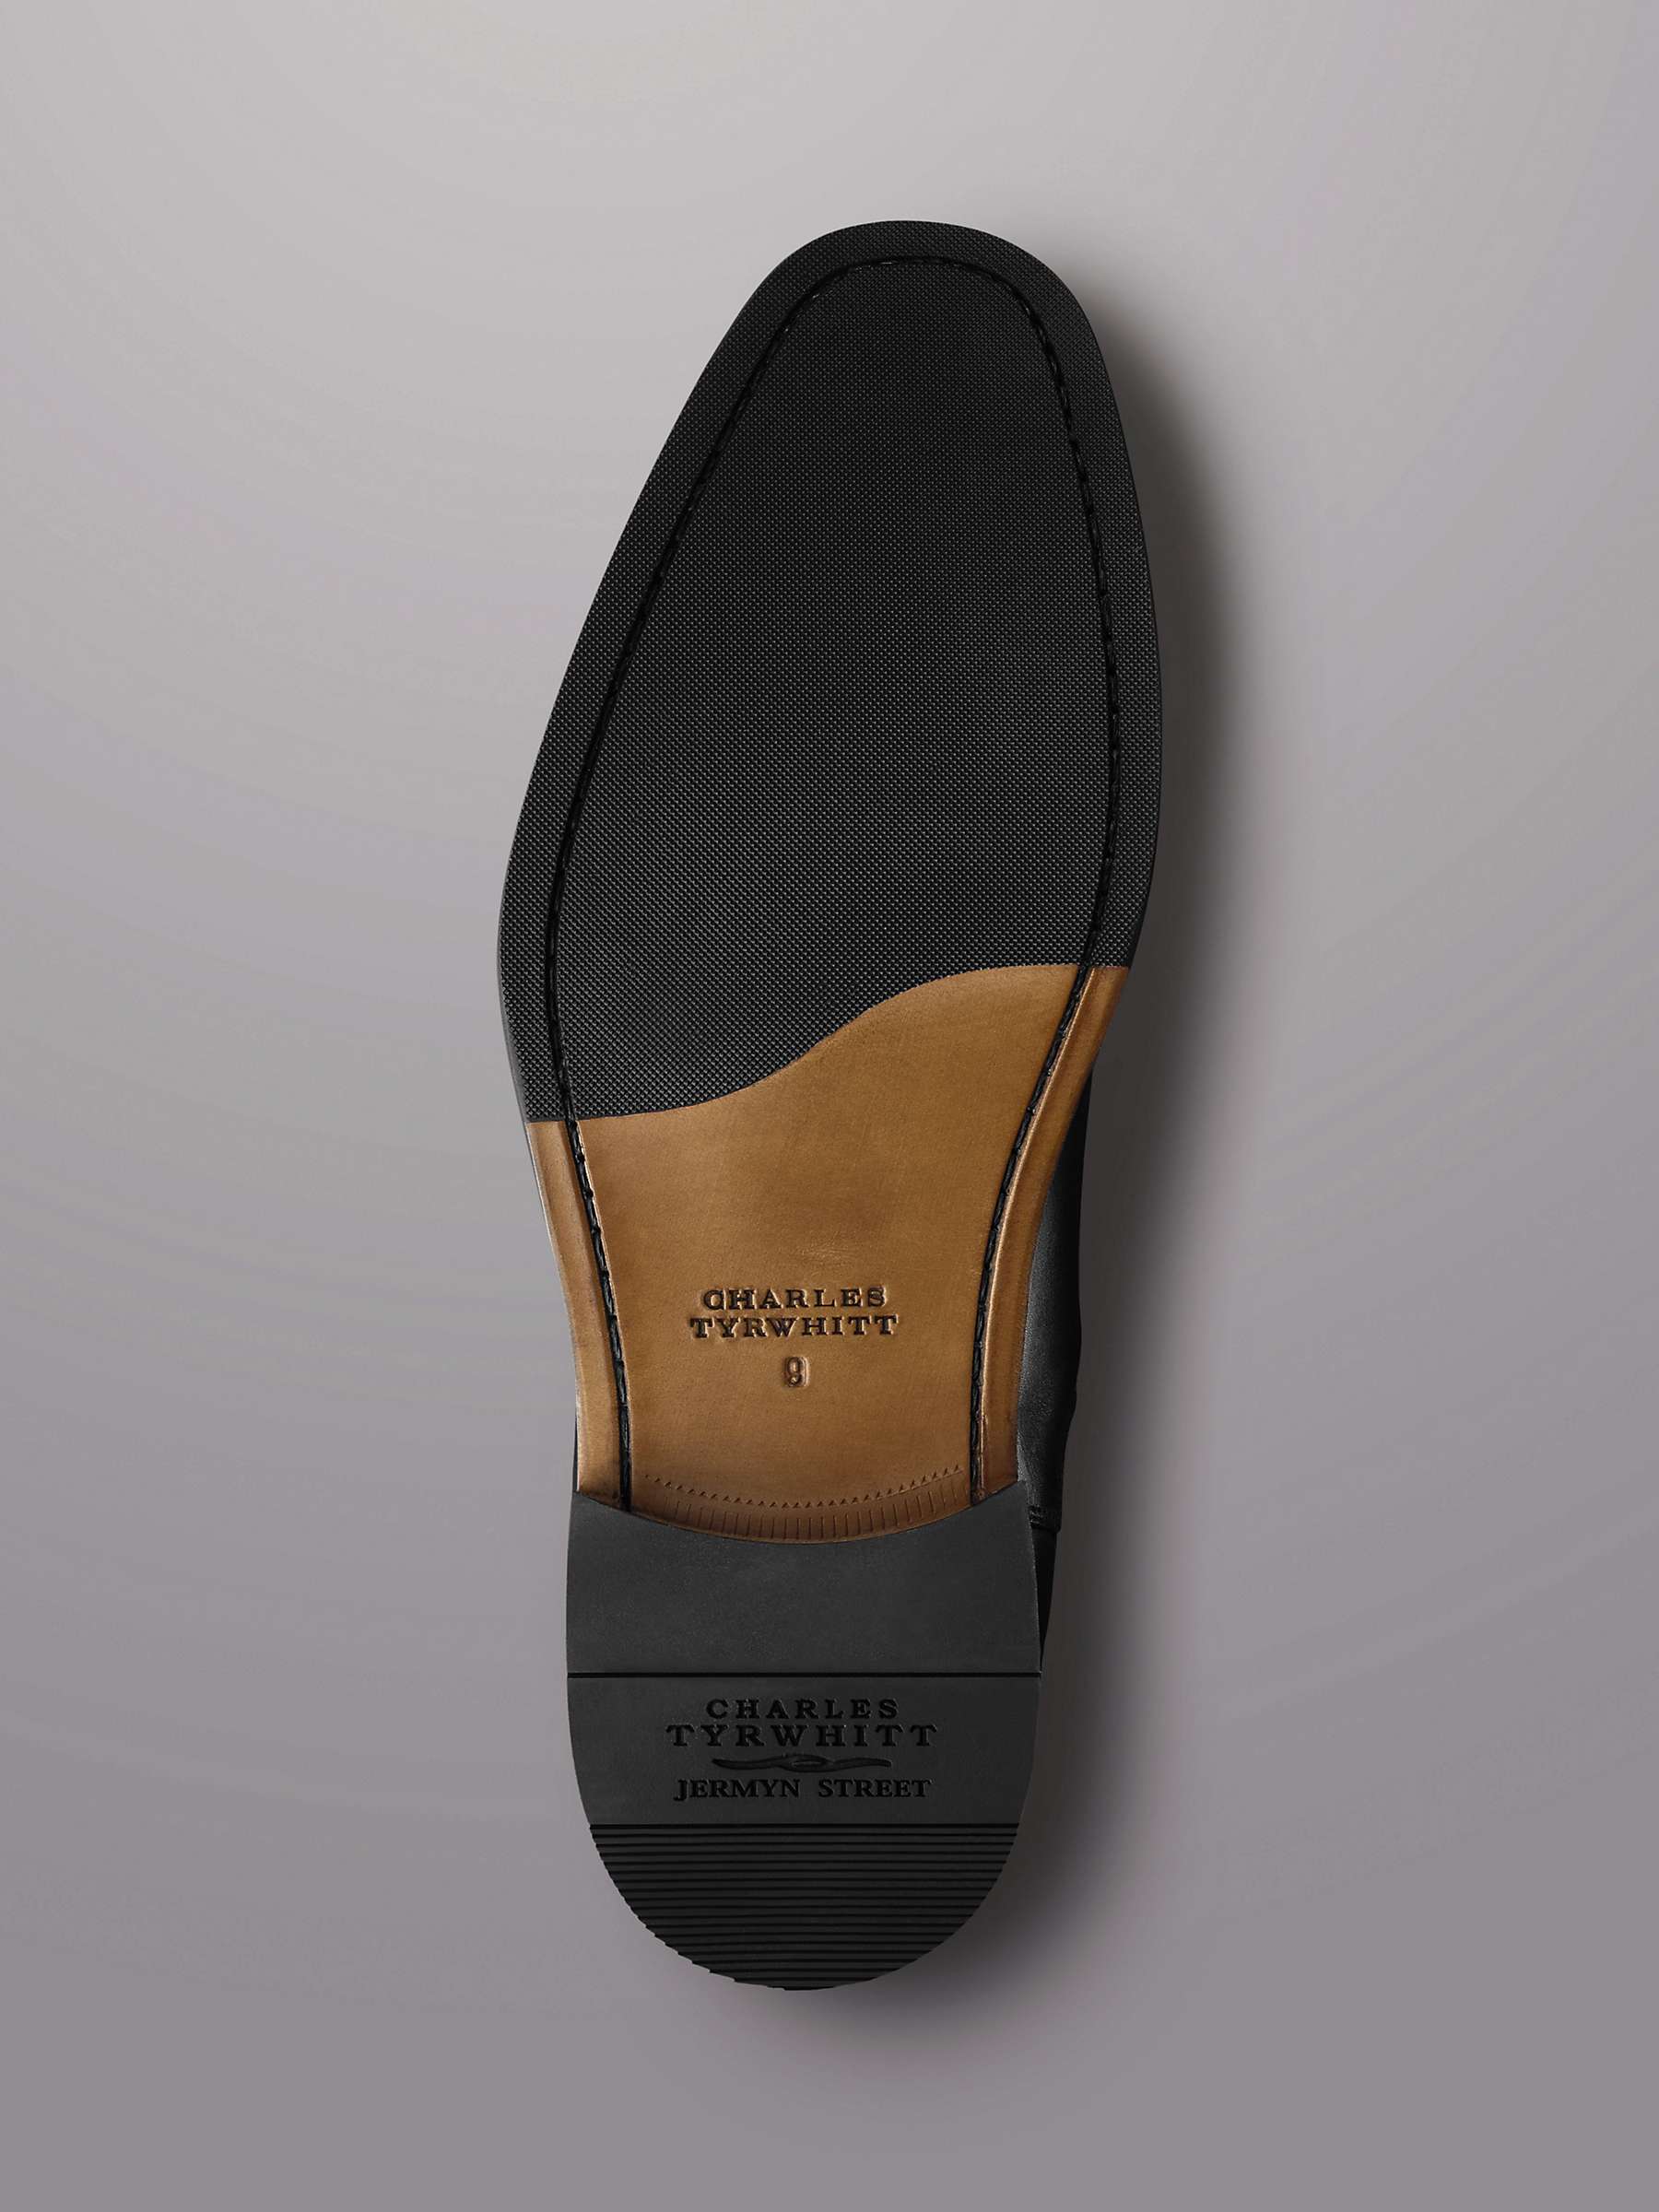 Buy Charles Tyrwhitt Leather Chelsea Boots, Black Online at johnlewis.com